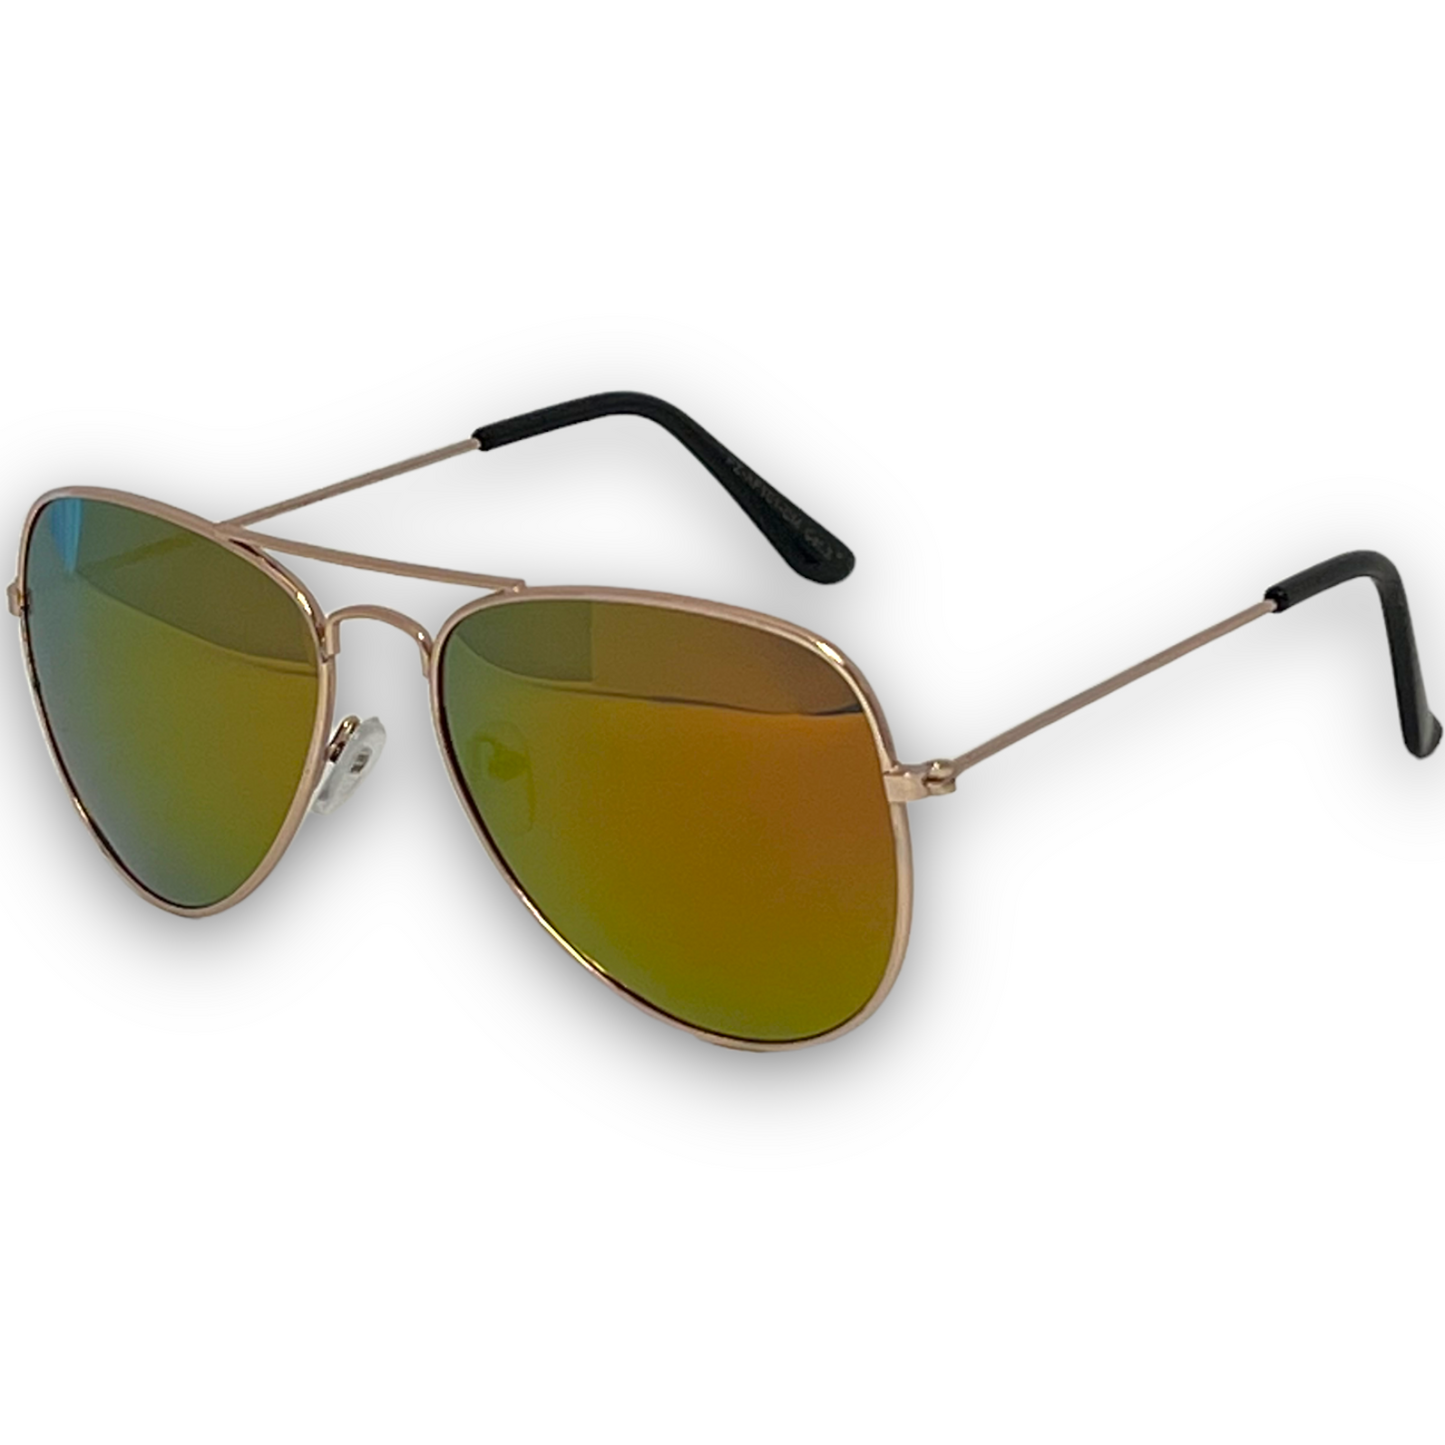 Retro Polarized Pilot Sunglasses for Men and Women GOLD/ORANGE MIRROR LENS Air Force PhotoRoom_20230126_121321_208c6792-415e-4db2-a14a-64cc1528fb91